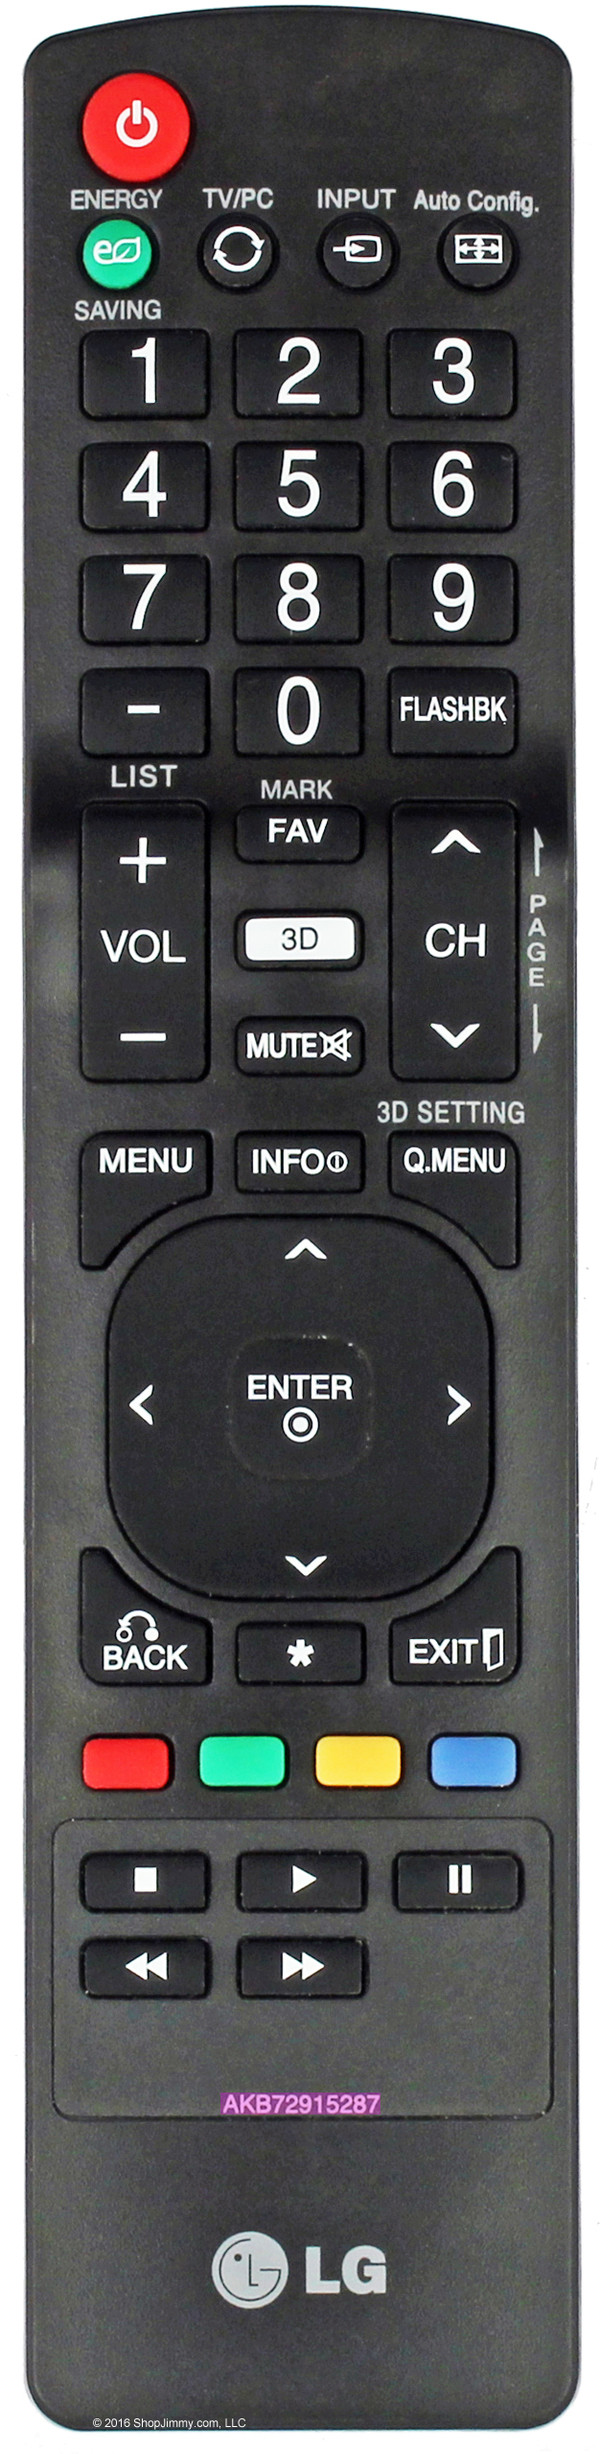 LG AKB72915287 Remote Control - New